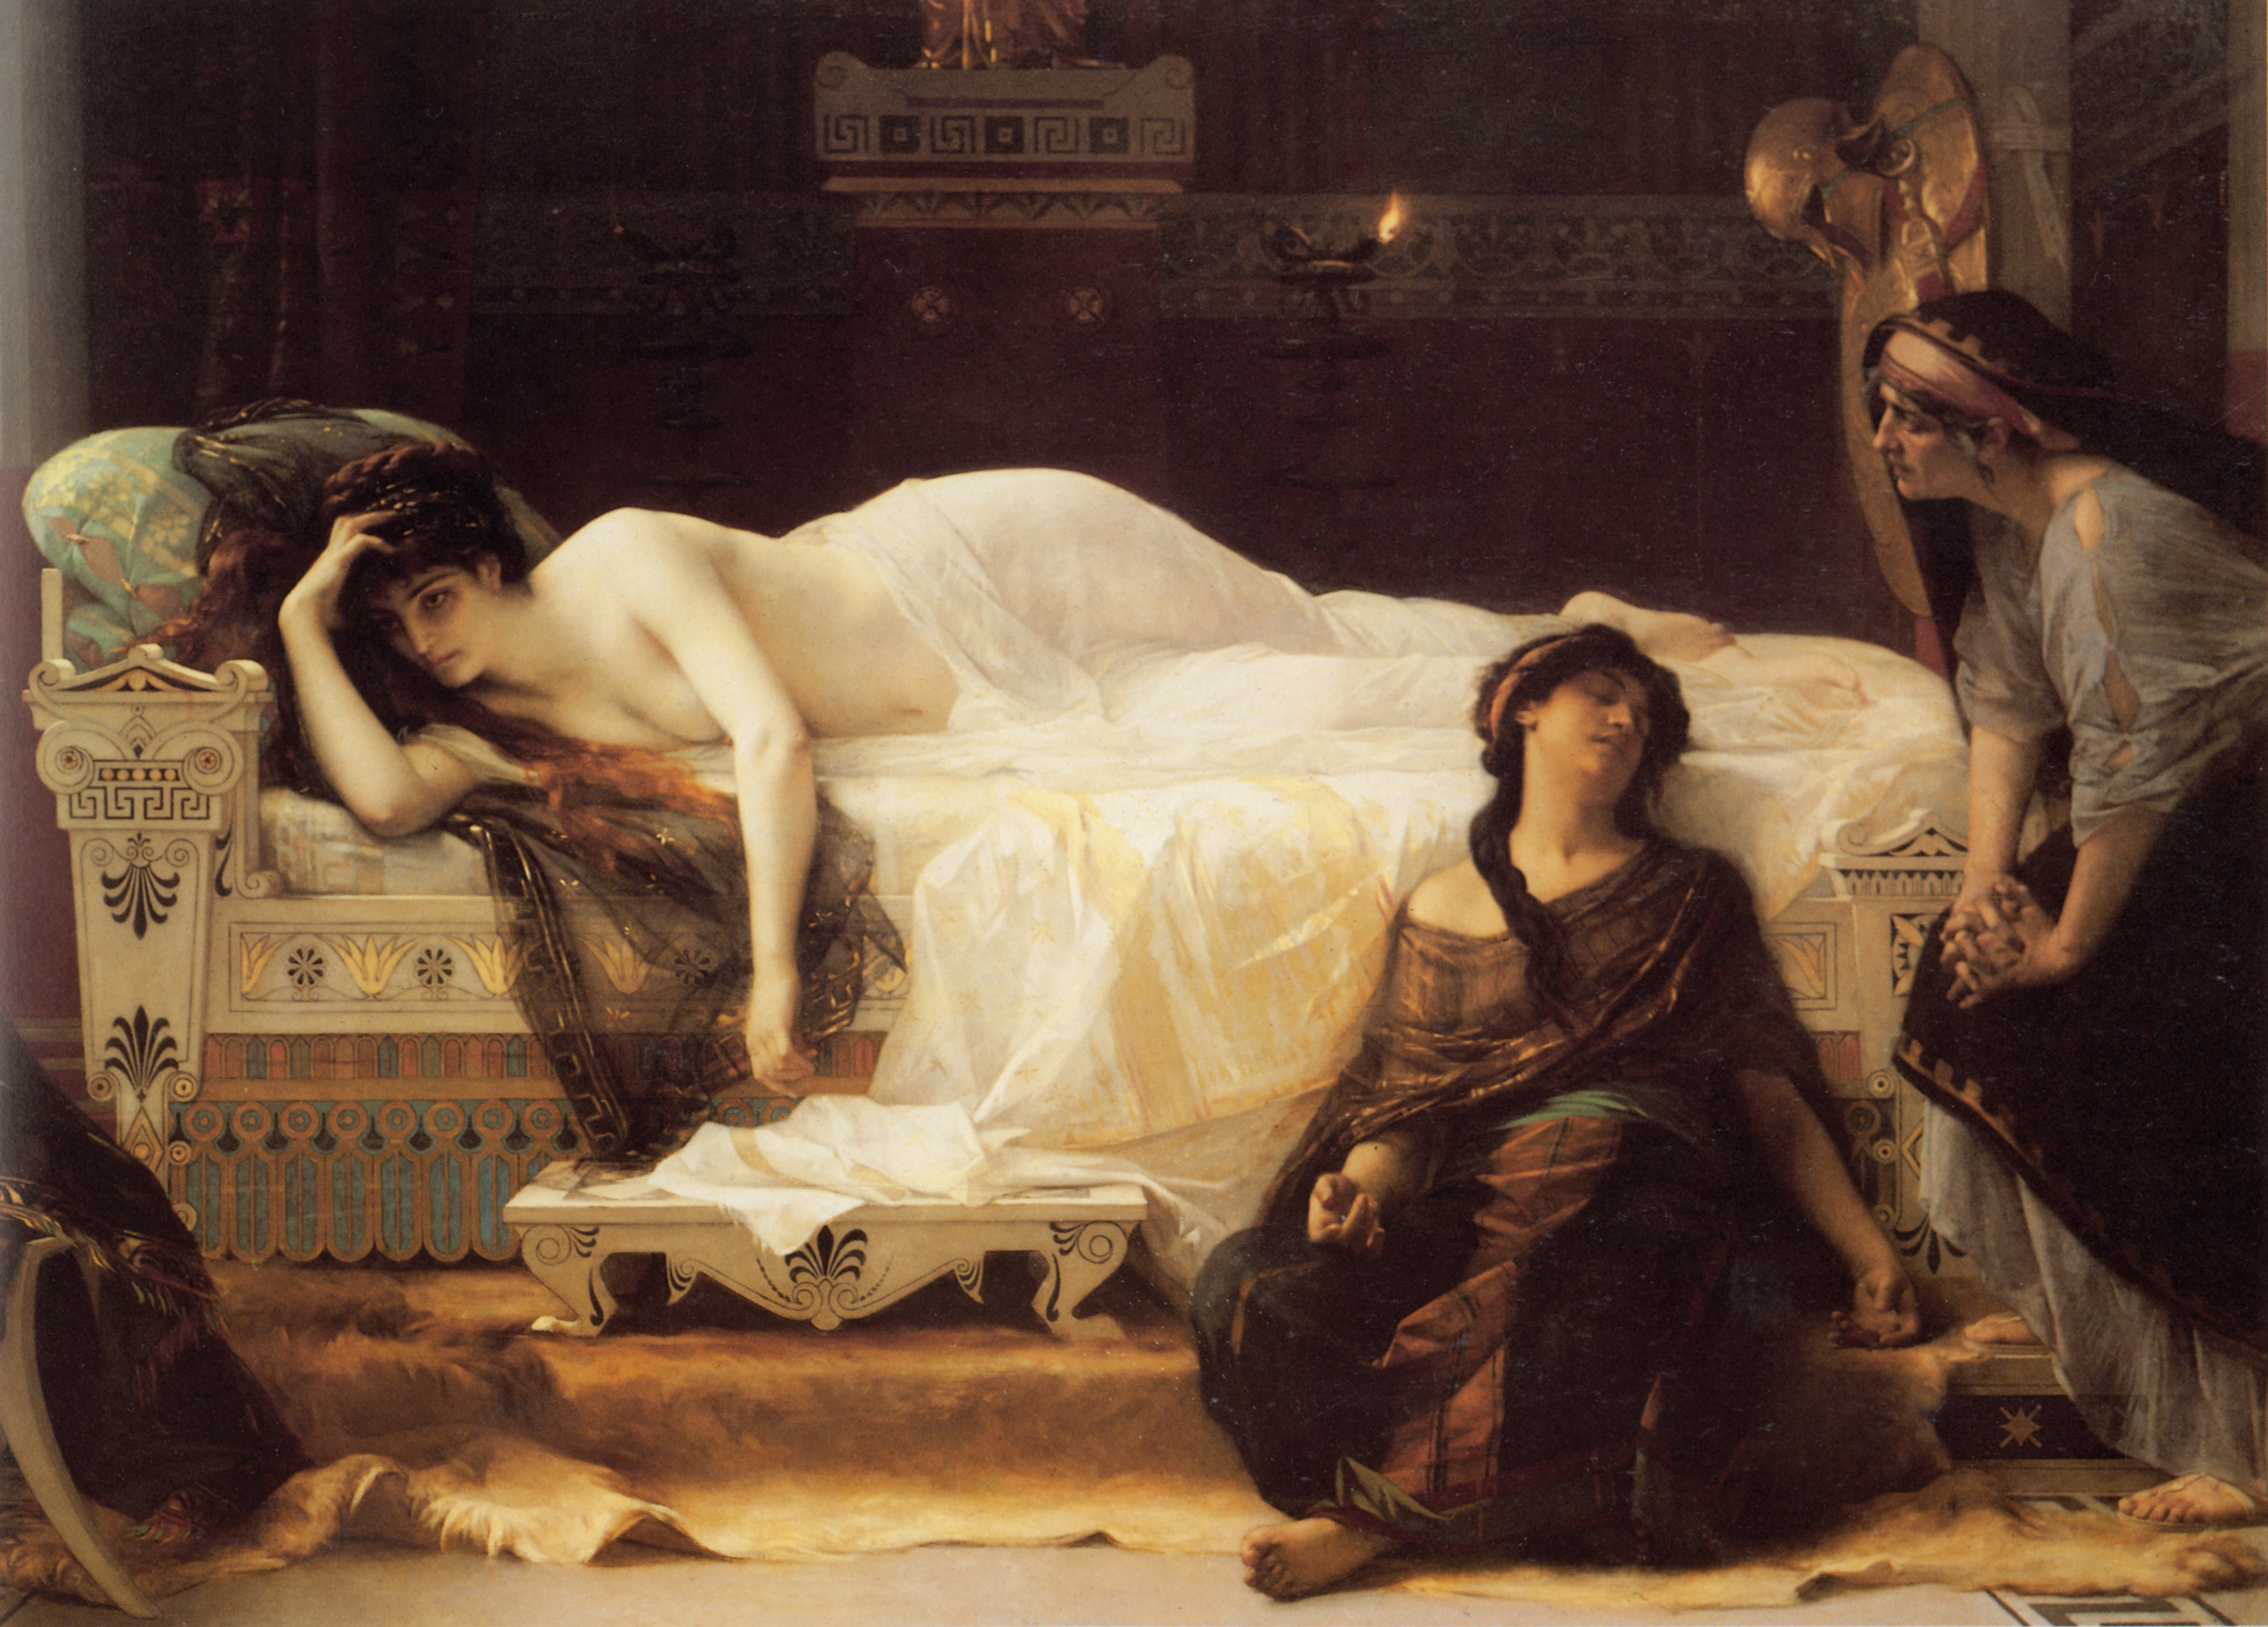 Phaedra by Alexandre Cabanel - 1880 - 194.0 x 286.0 cm National Gallery of Australia